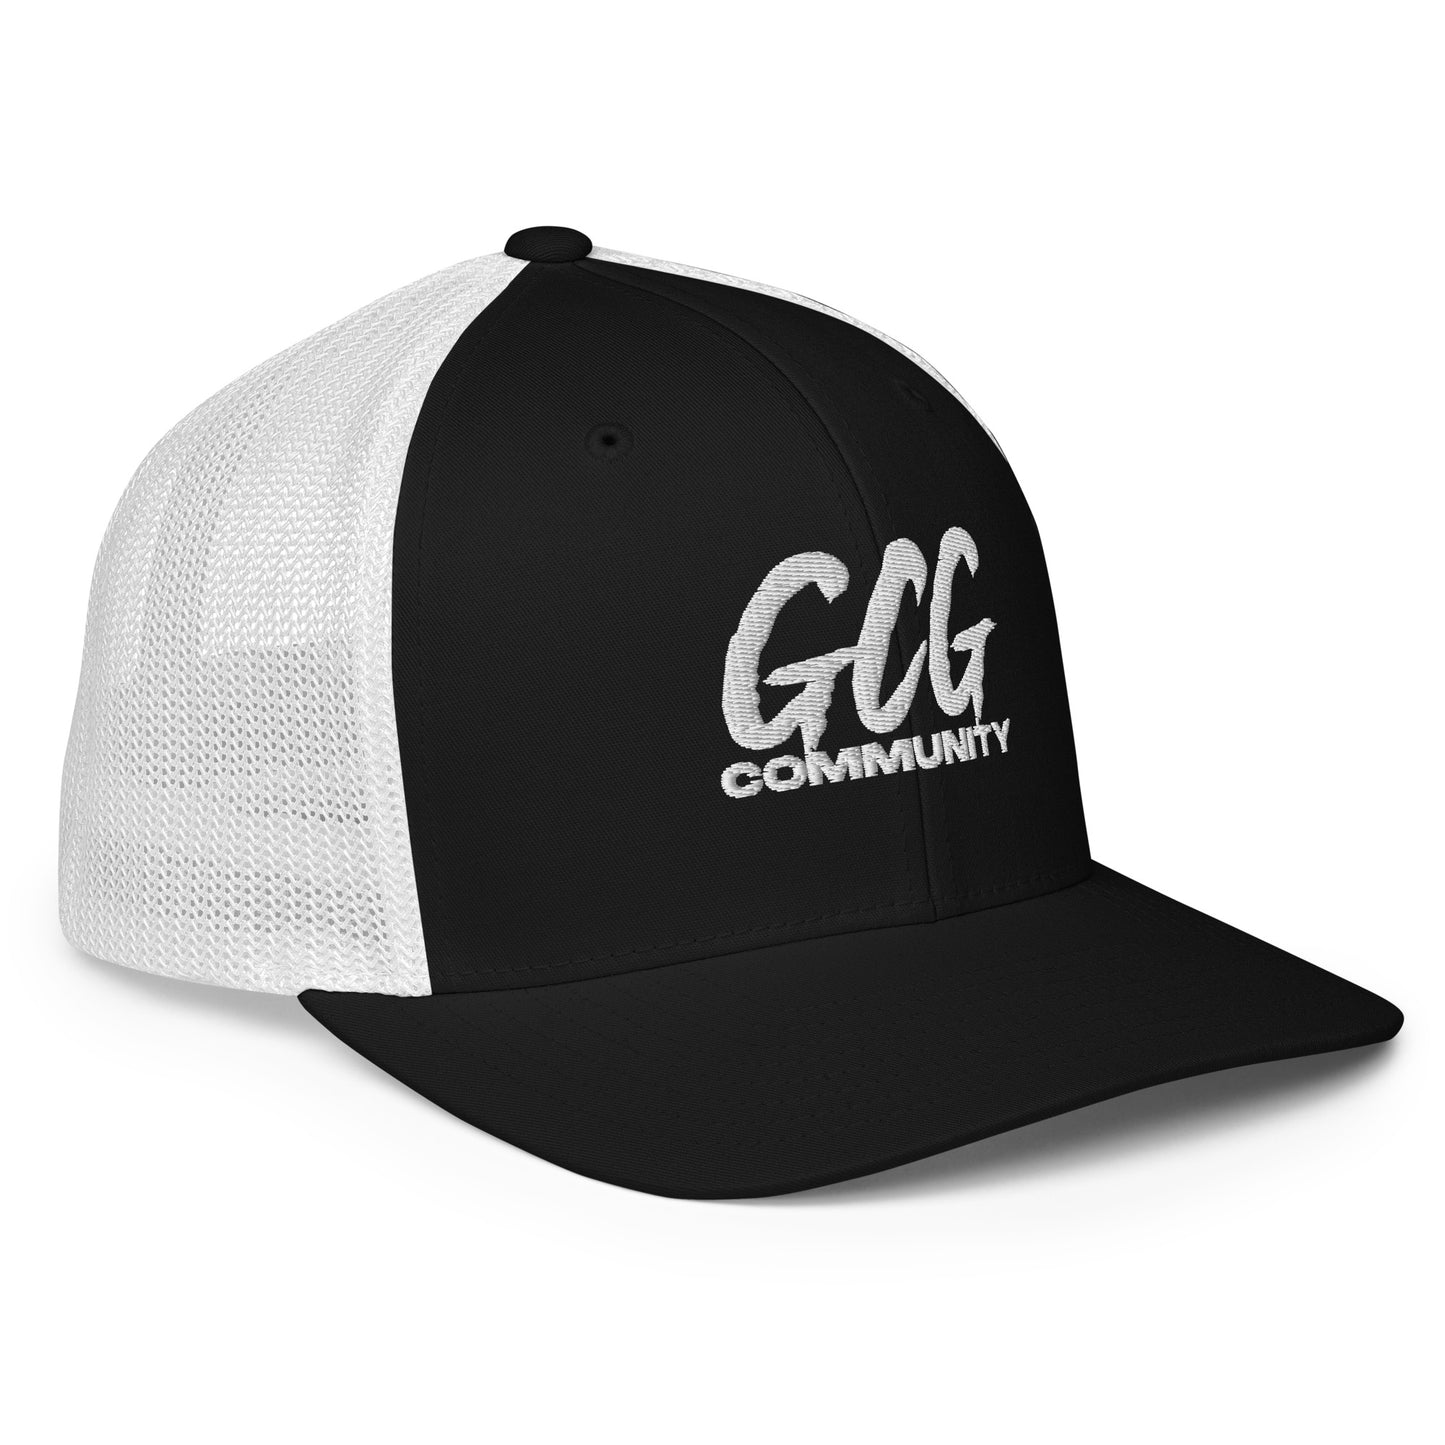 GCG Community Trucker Cap